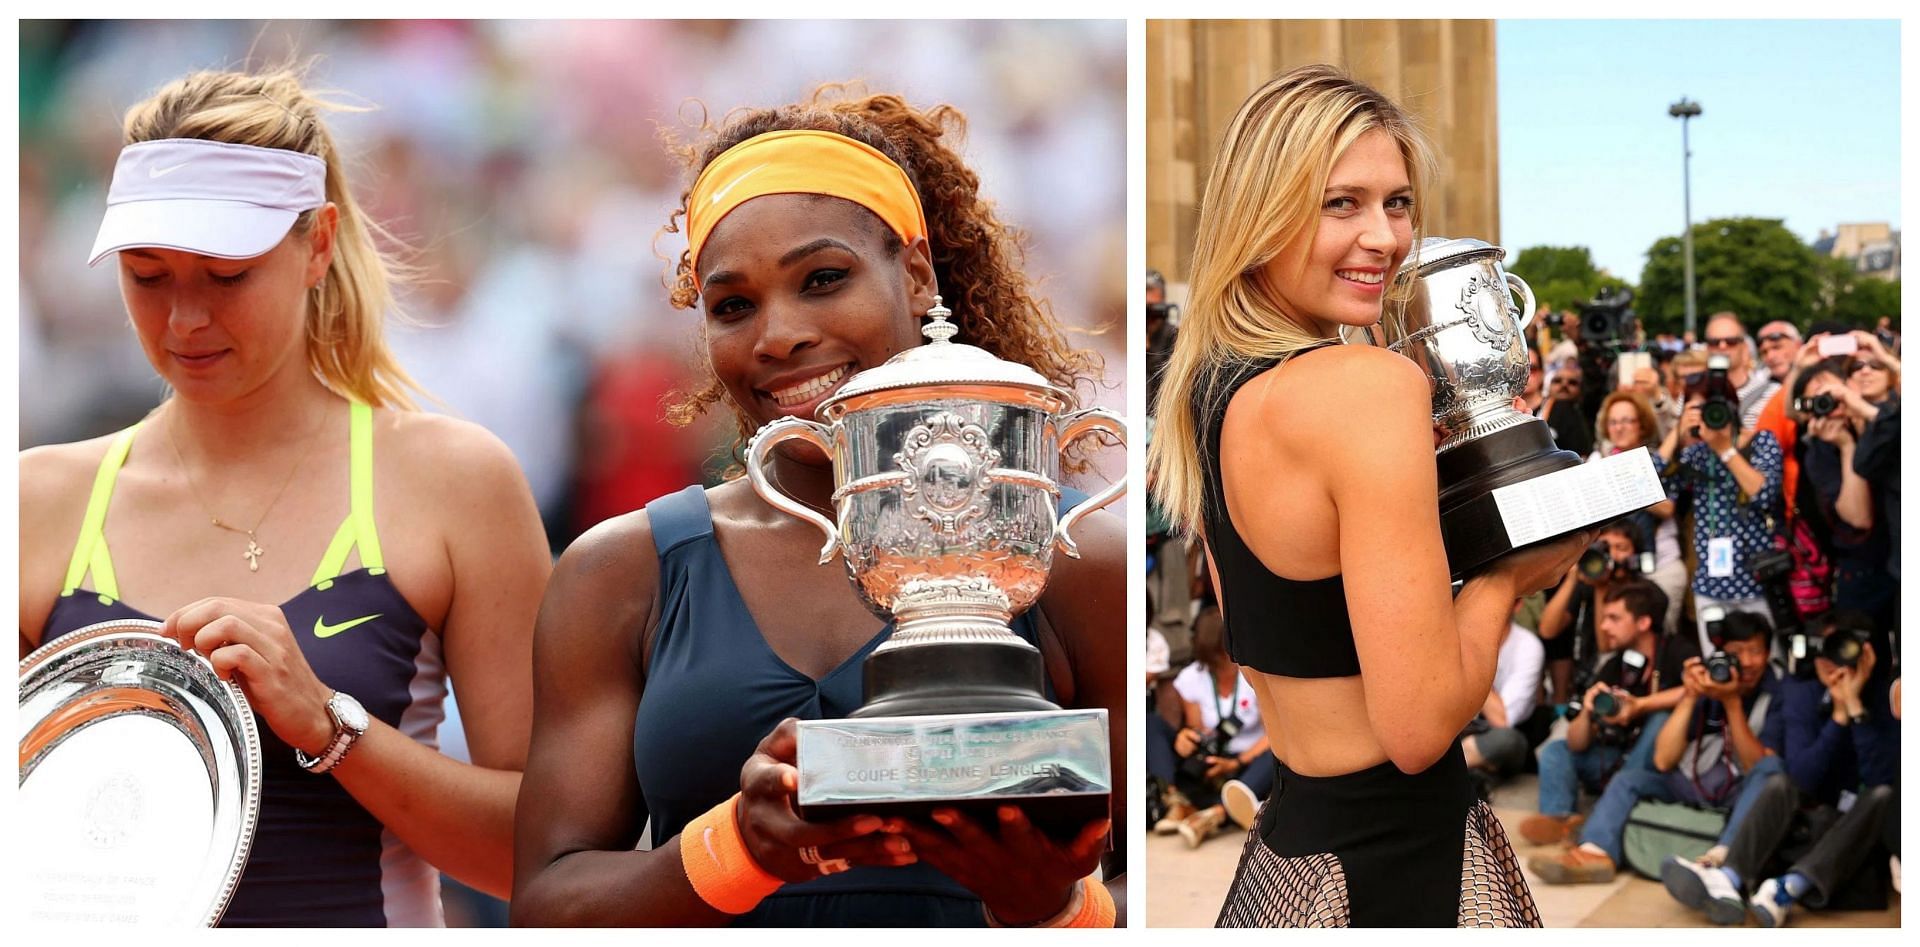 Sharapova who lost the 2013 French Open final to Serena Williams reigned supreme in 2014